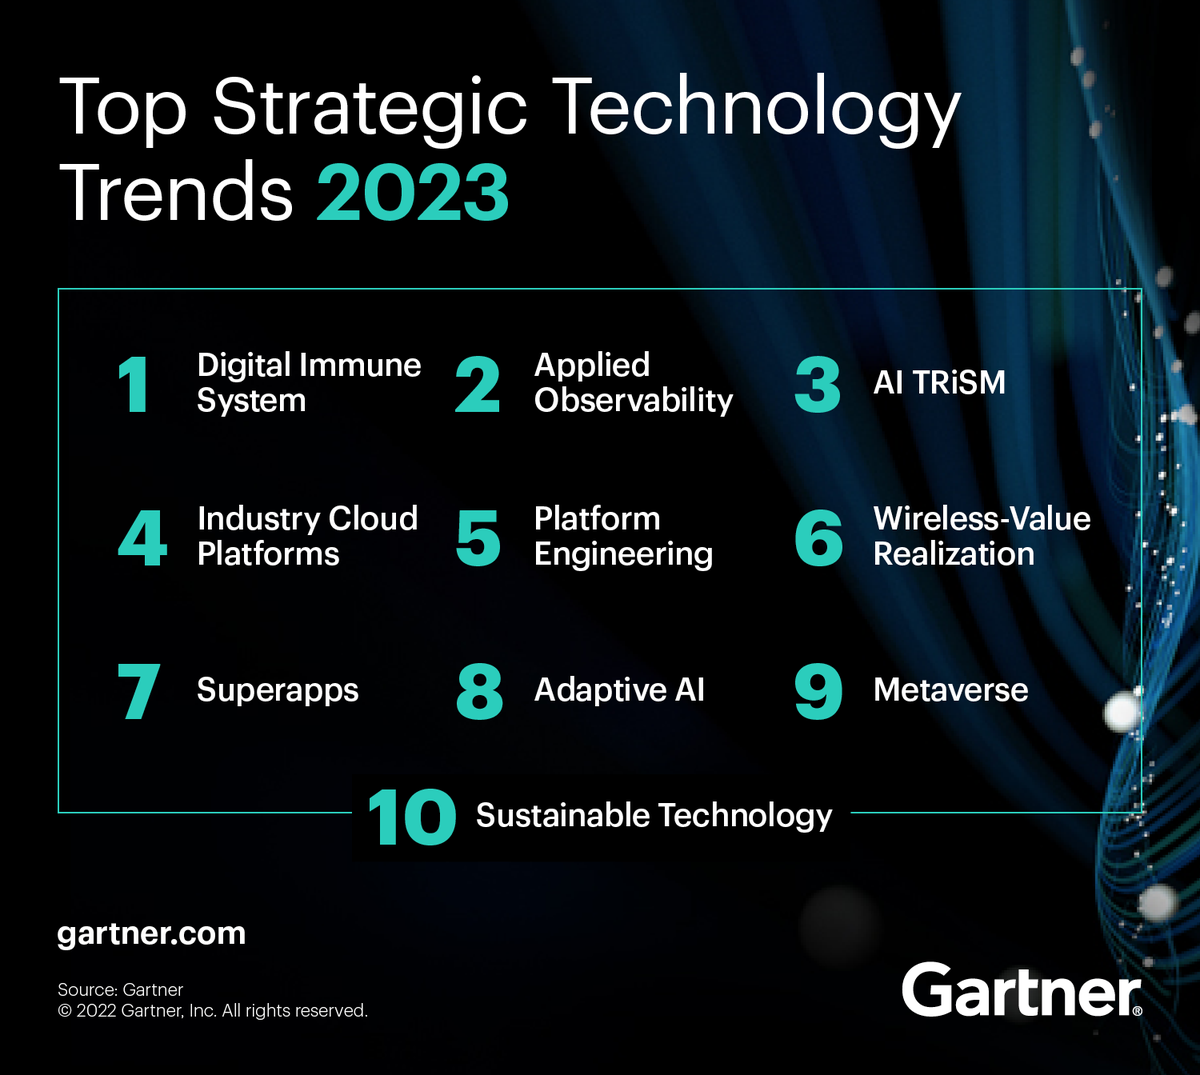 Gartner Identifies the Top 10 Strategic Technology Trends for 2023